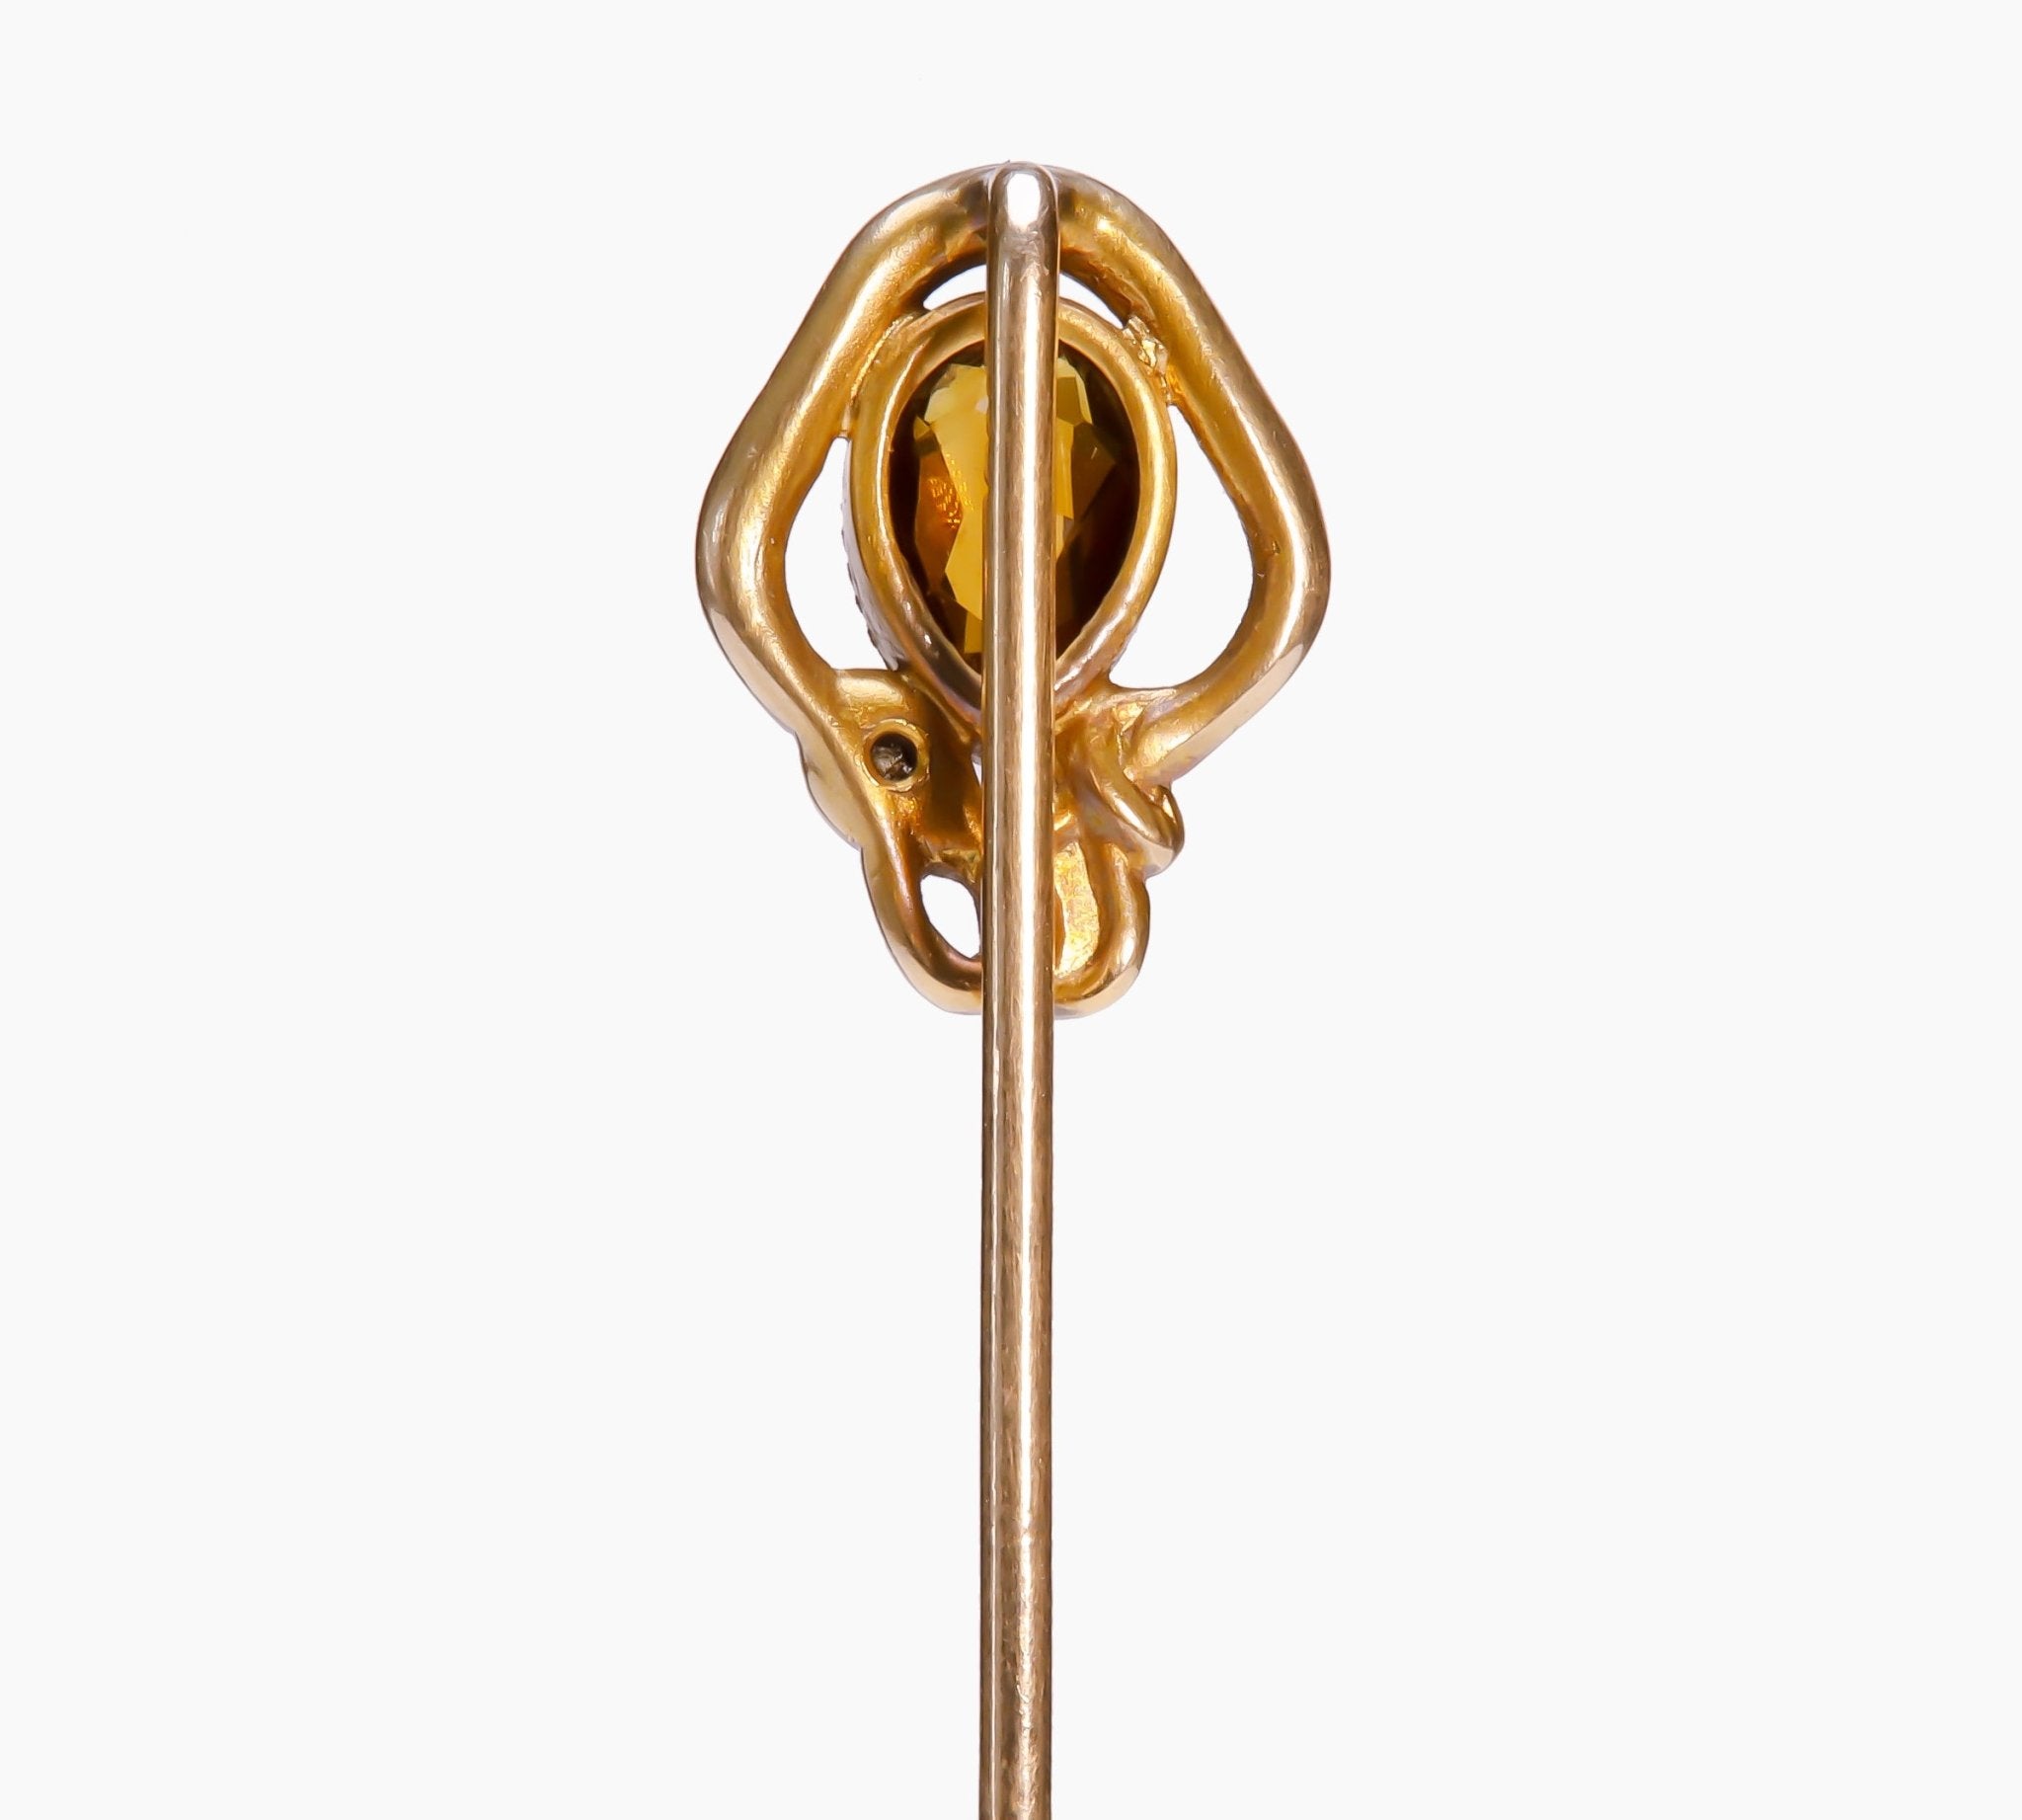 Antique Gold Citrine Diamond Snake Stick Pin